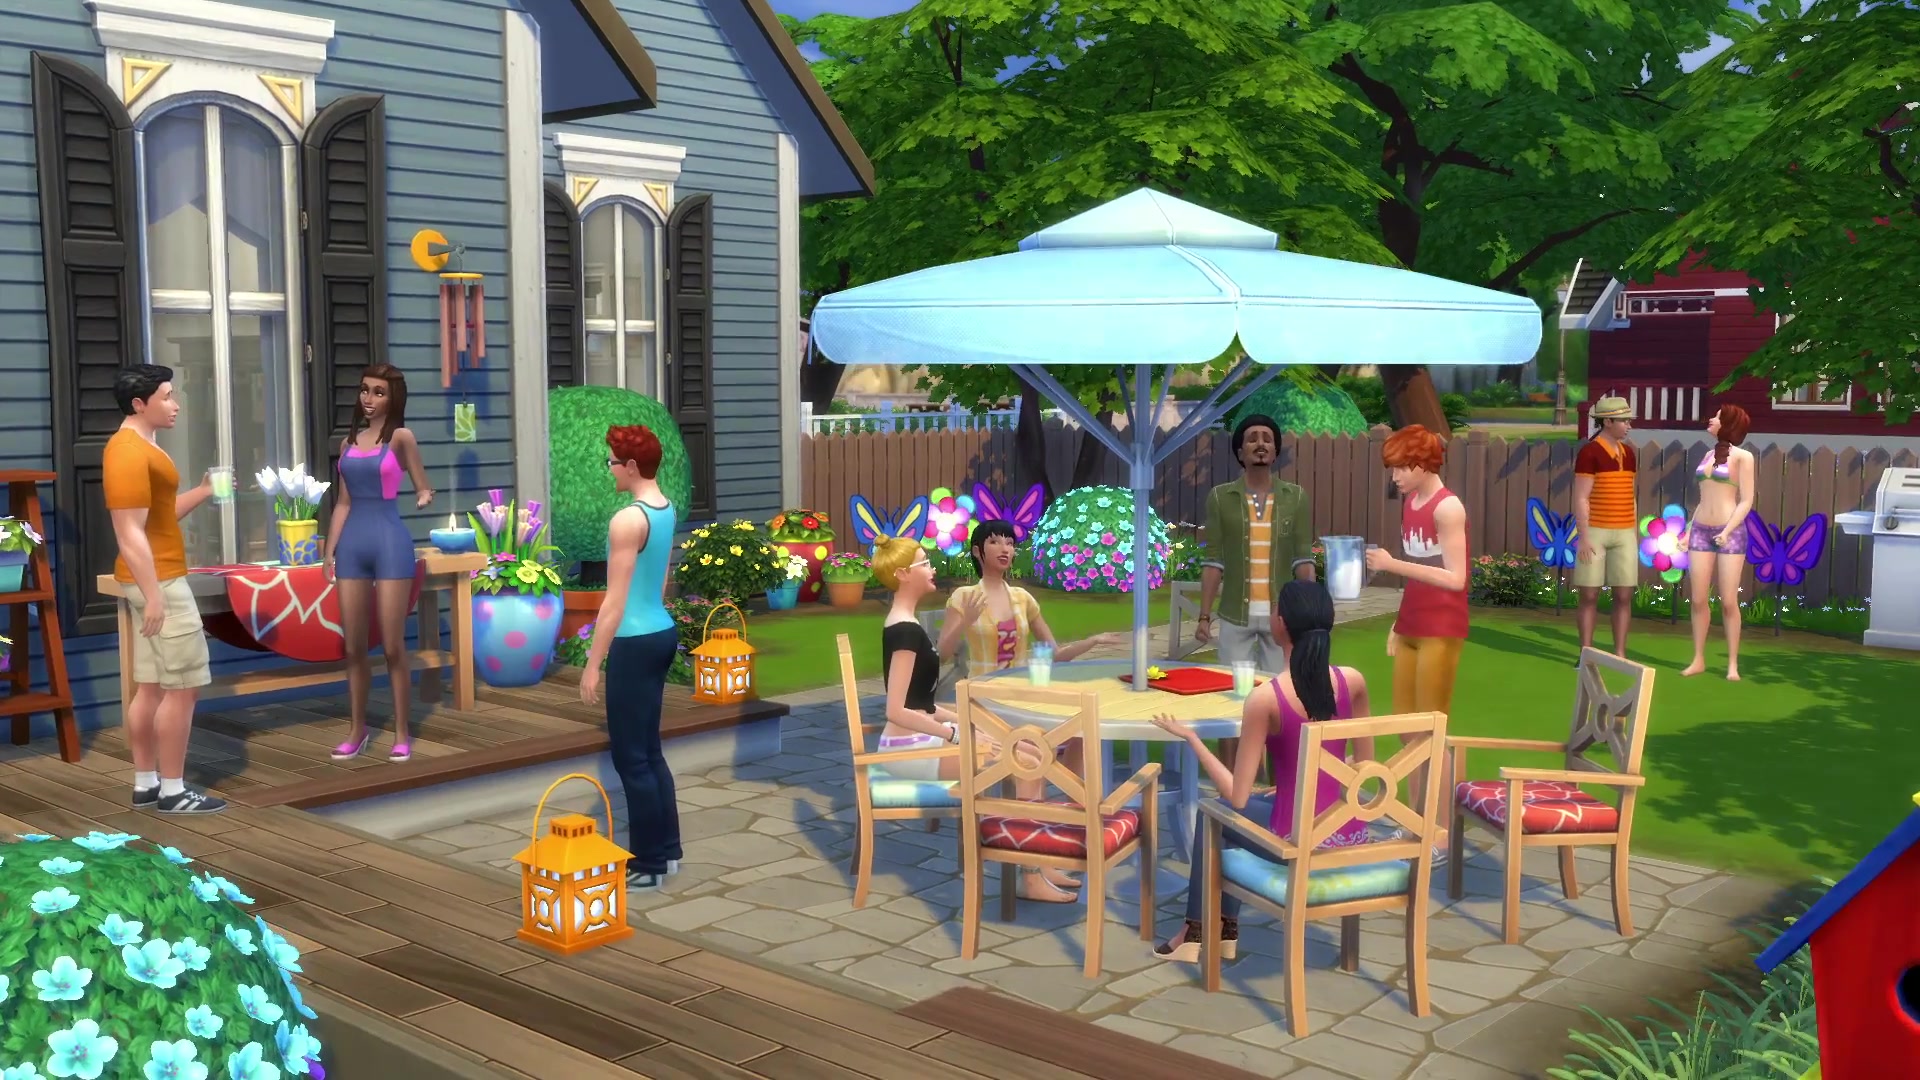 The Sims 4 Backyard Stuff Pack Guide